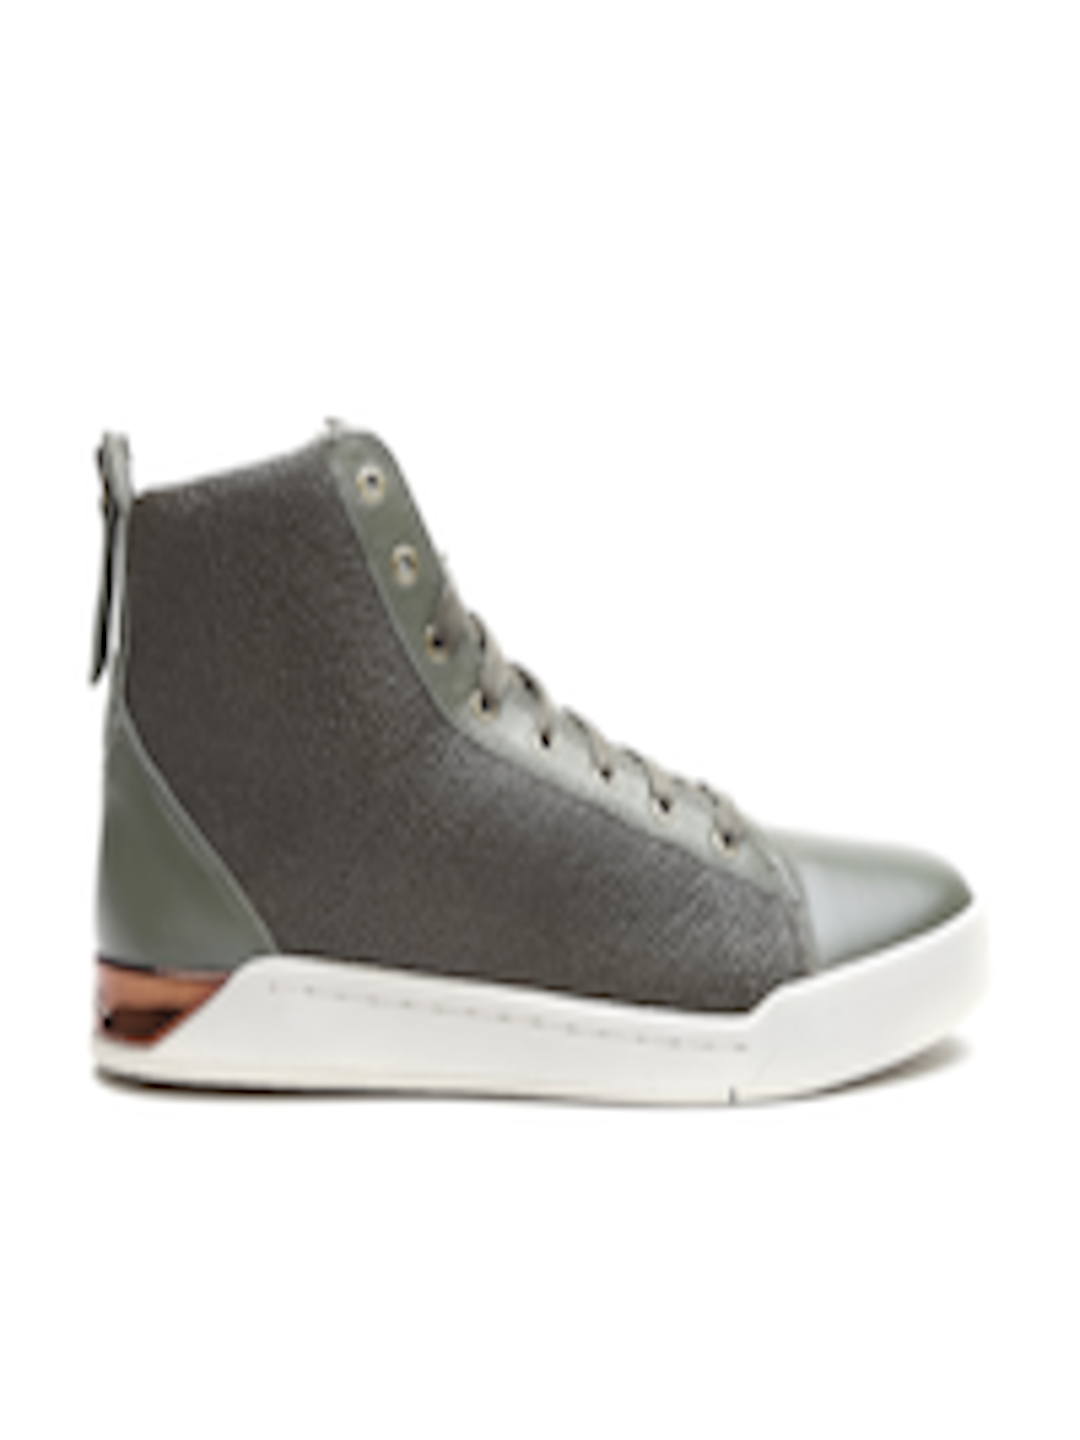 Buy DIESEL Men Olive Green Textured Leather Mid Top Sneakers - Casual ...